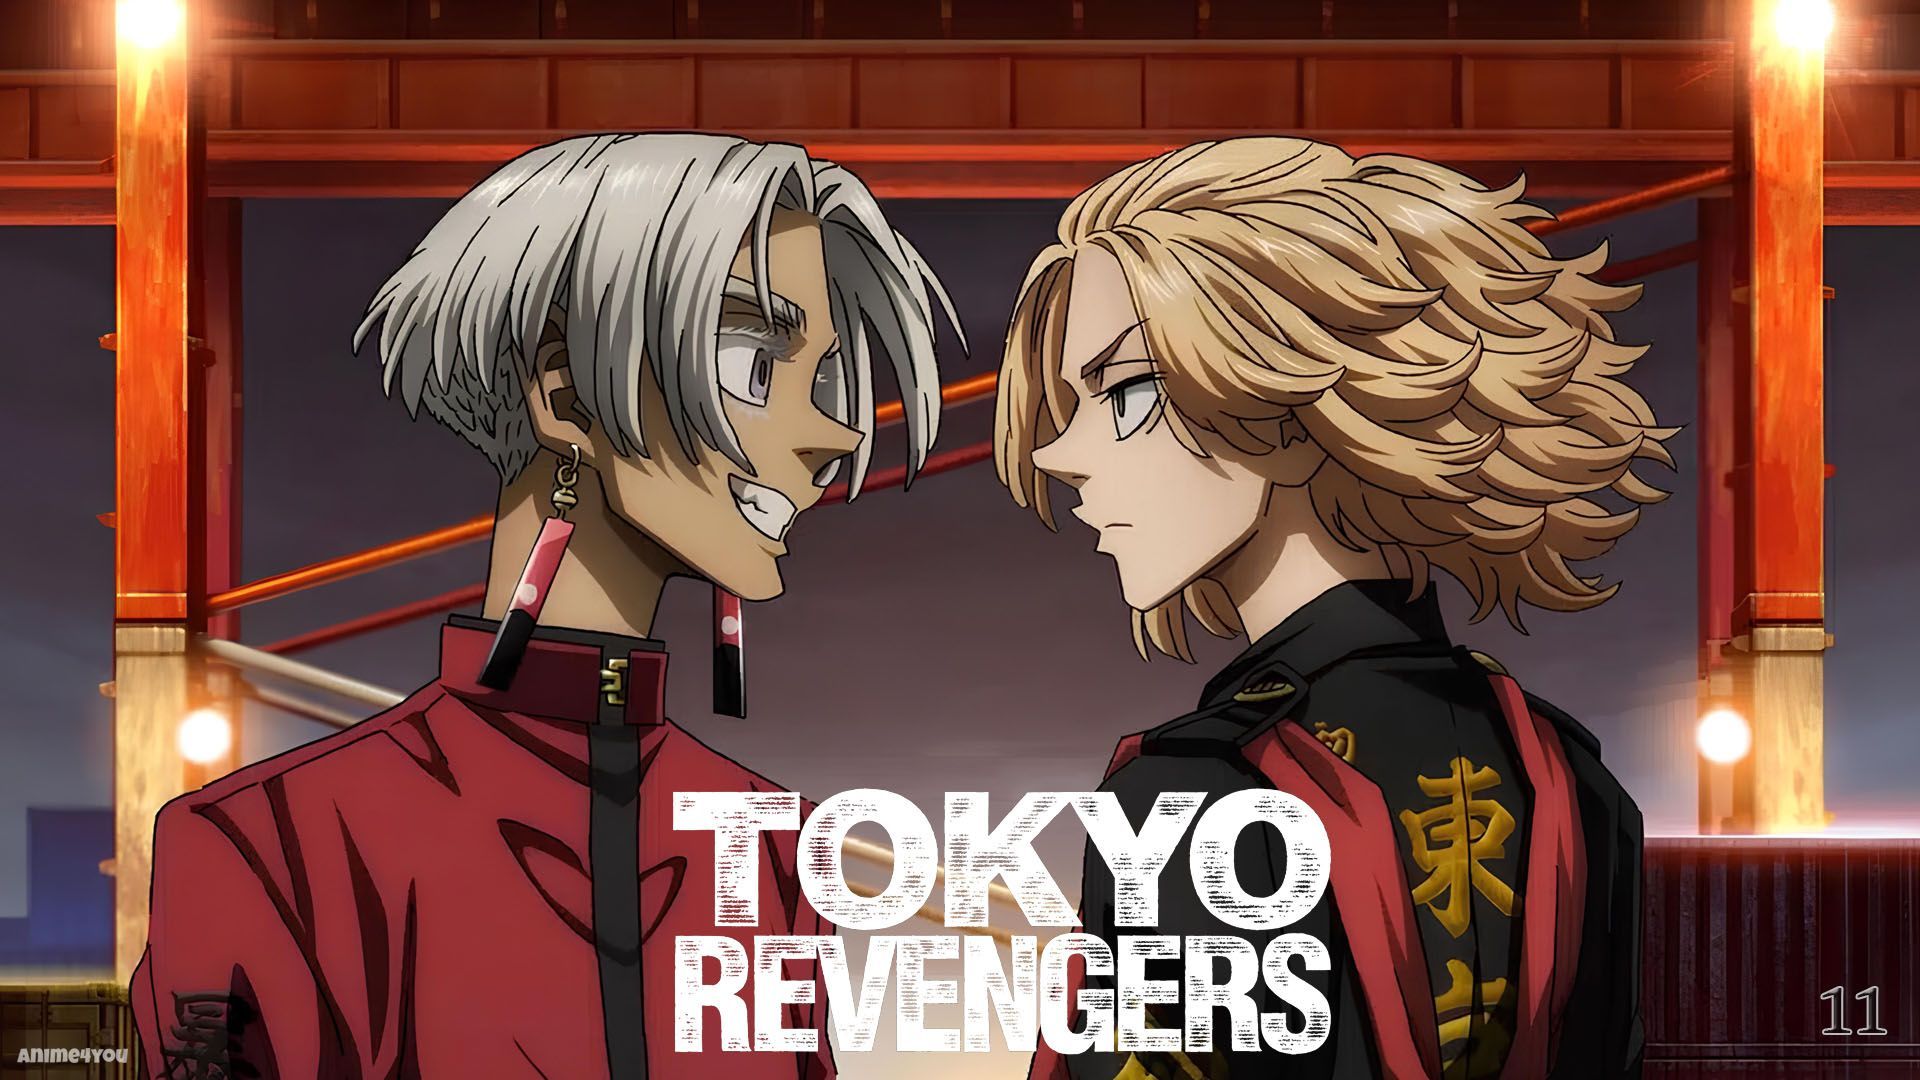 Watch Tokyo Revengers Episode 11 Online - Respect